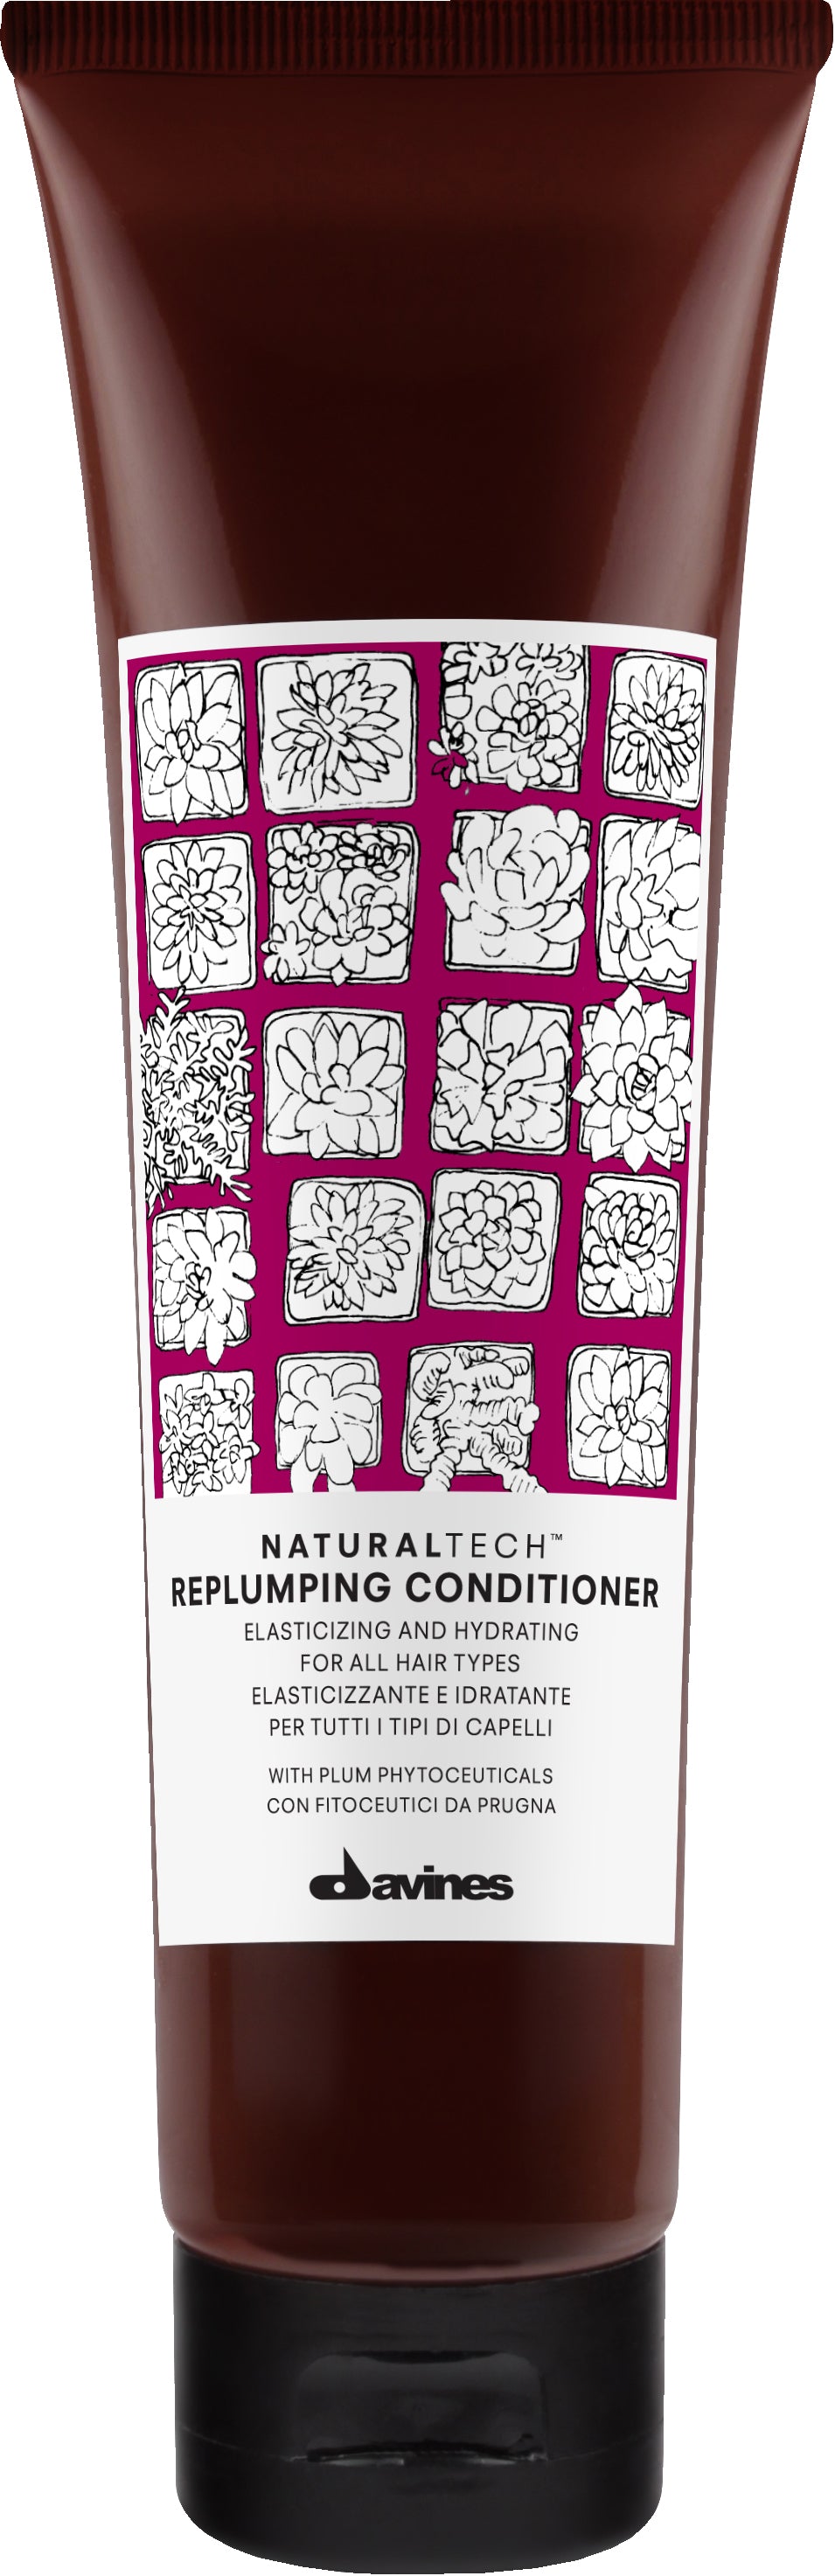 Naturaltech Replumping Conditioner